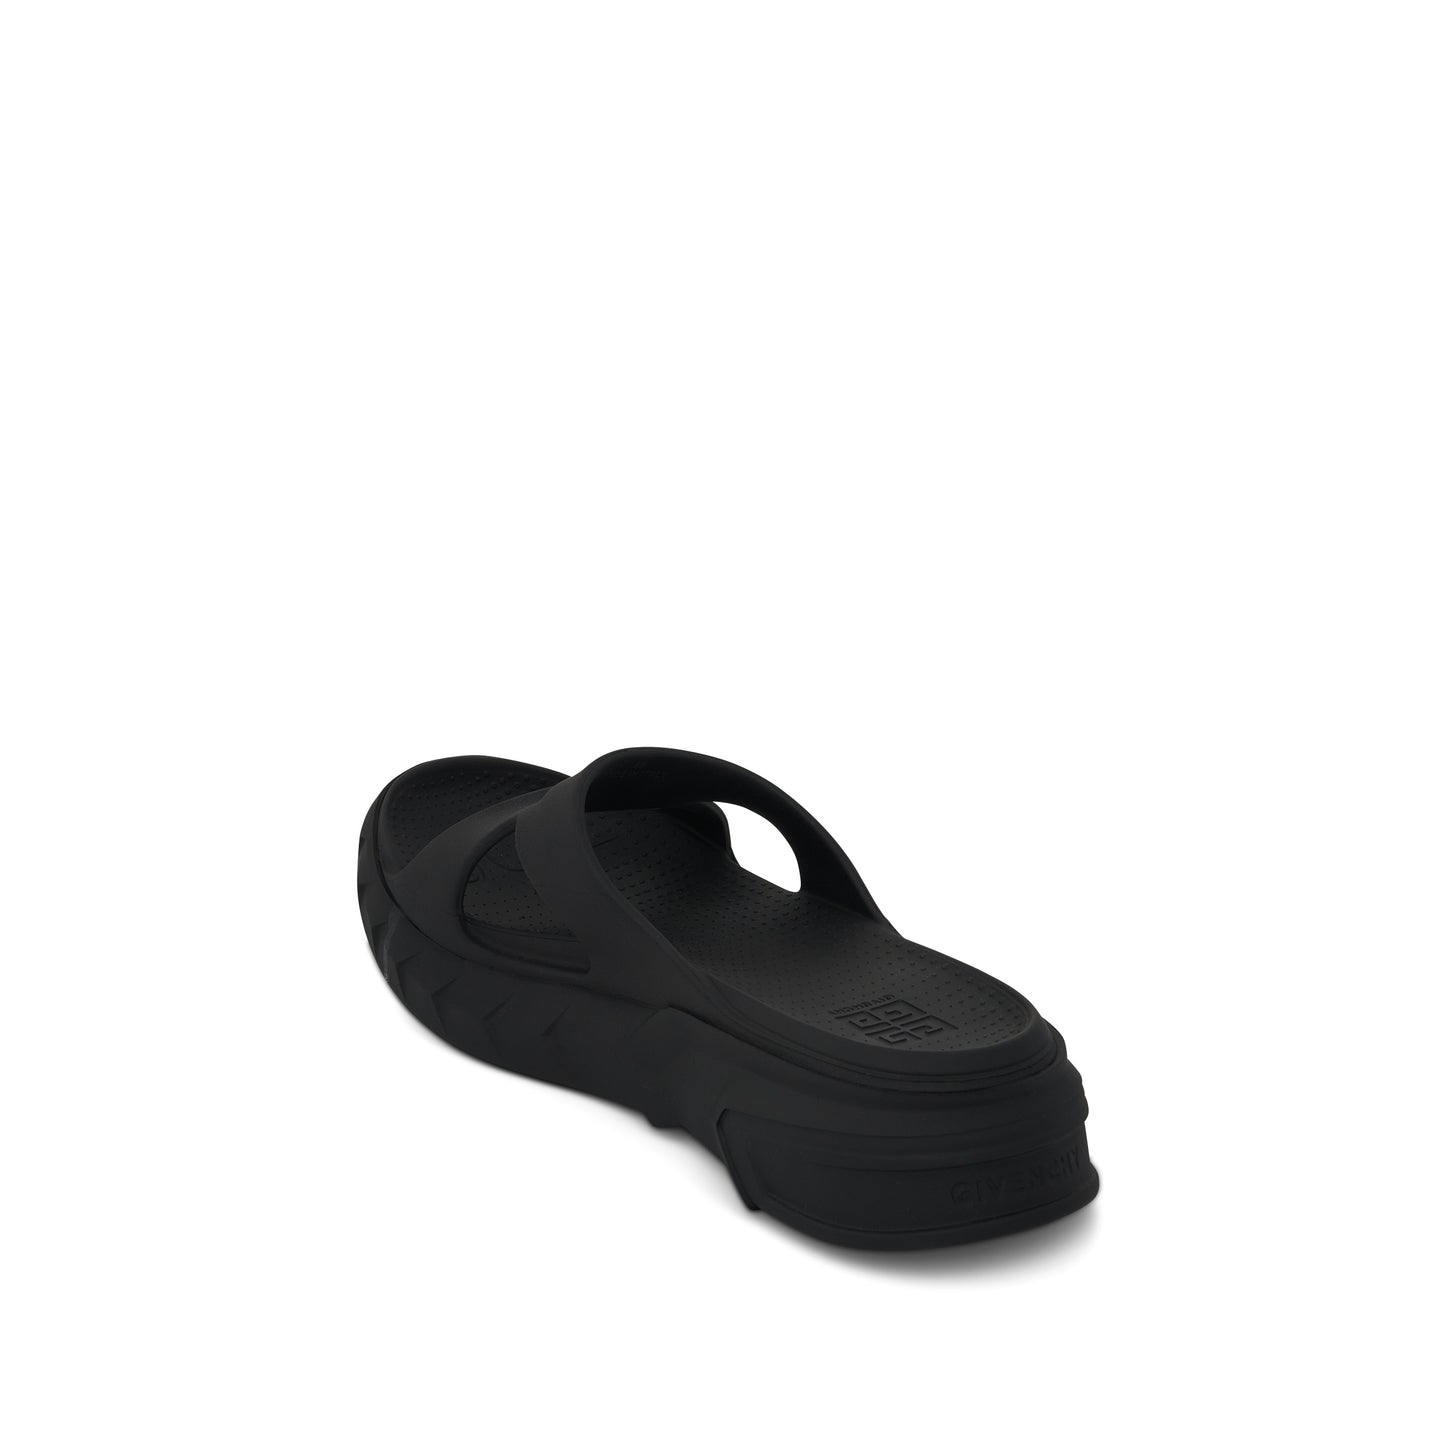 Marshmallow Sandal with 4G Logo in Black